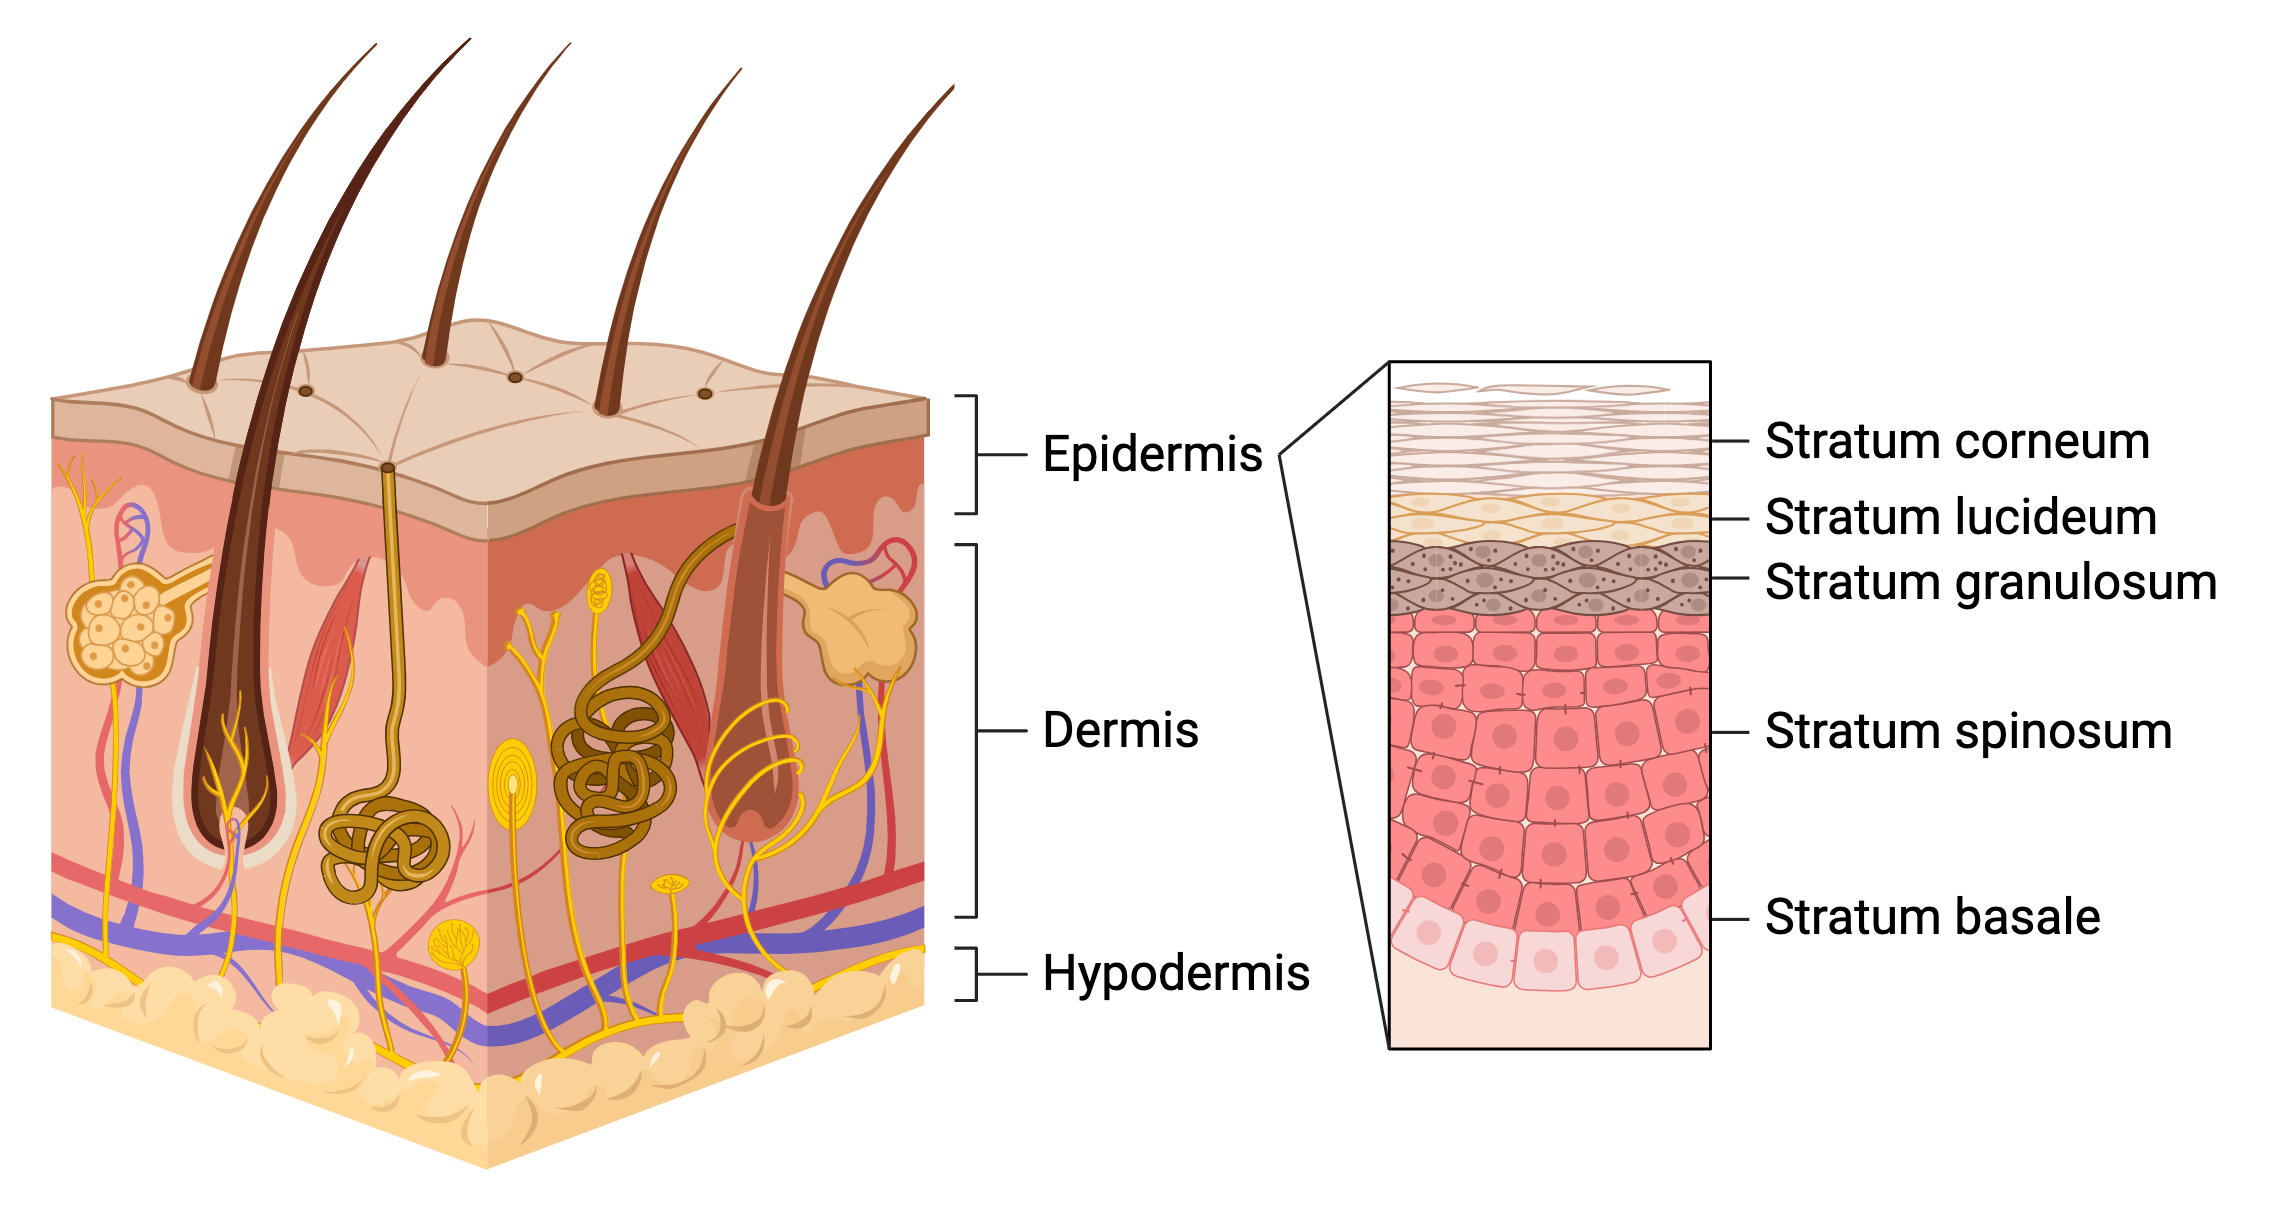 Epidermal layers